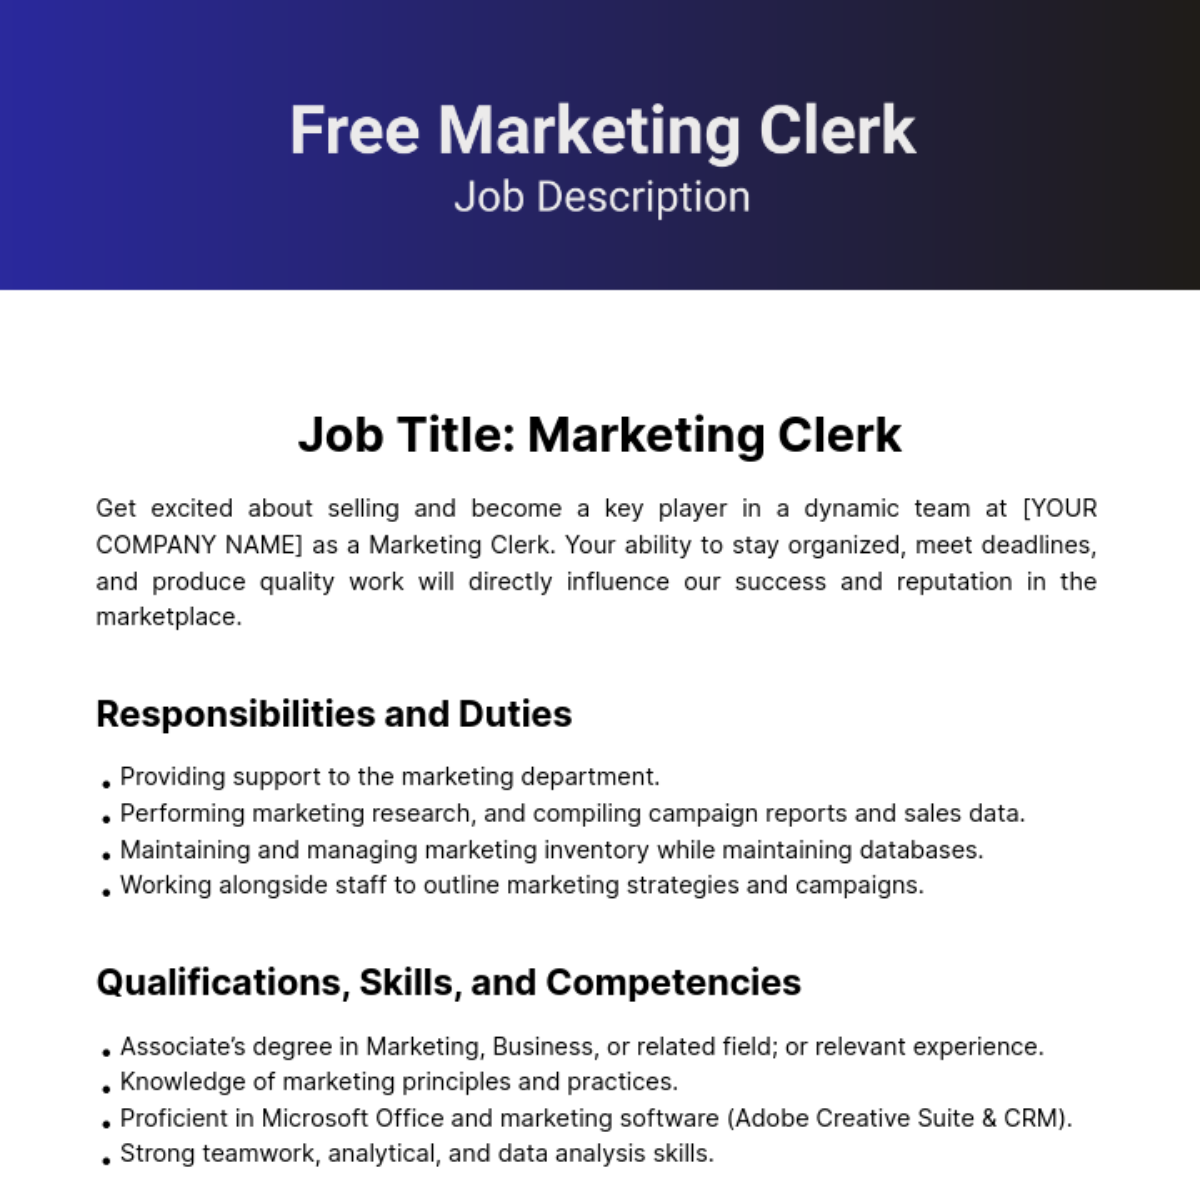 Free Marketing Clerk Job Description Template